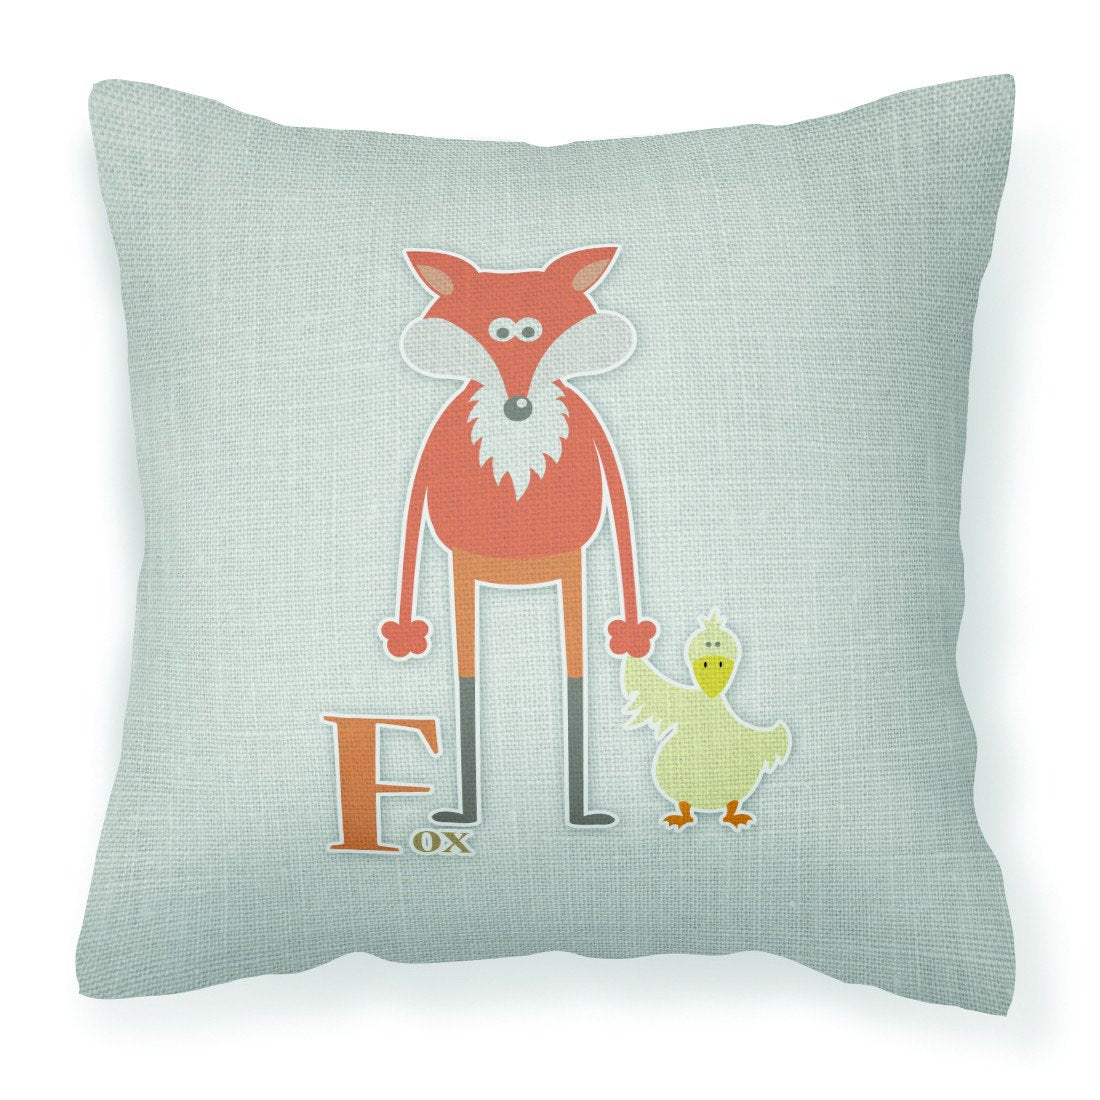 Alphabet F for Fox Fabric Decorative Pillow BB5731PW1818 by Caroline's Treasures